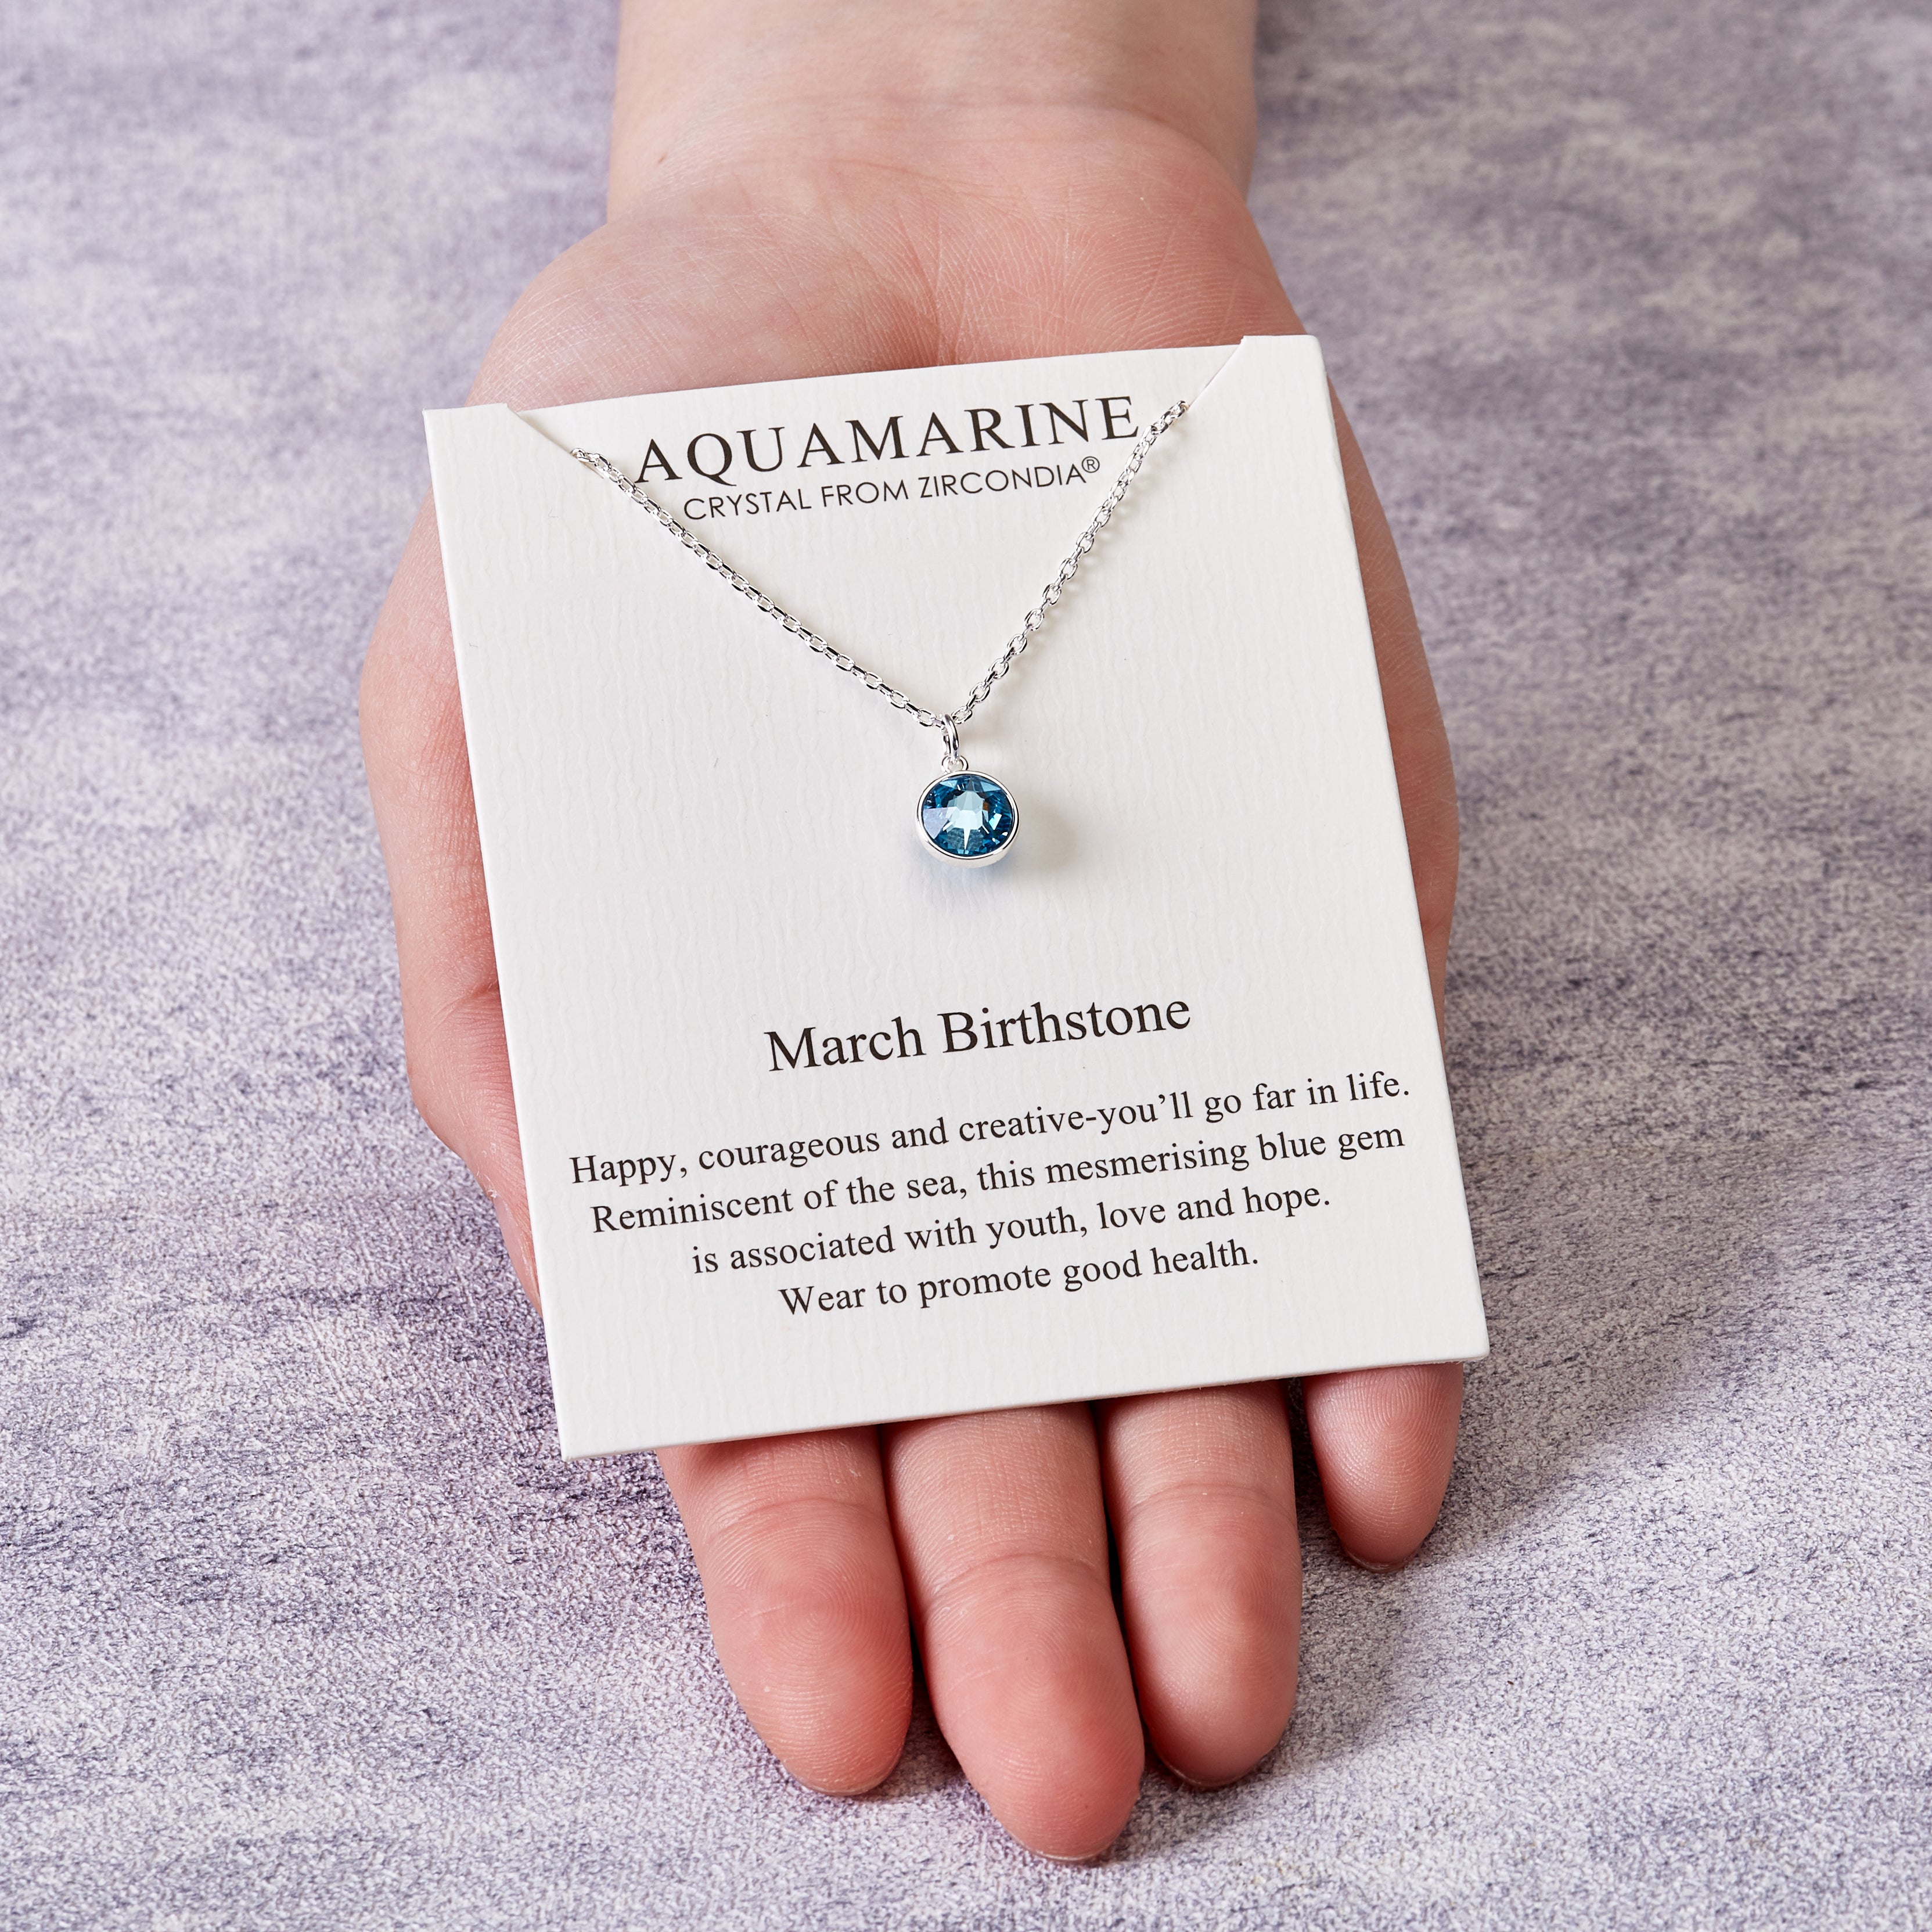 March (Aquamarine) Birthstone Necklace Created with Zircondia® Crystals